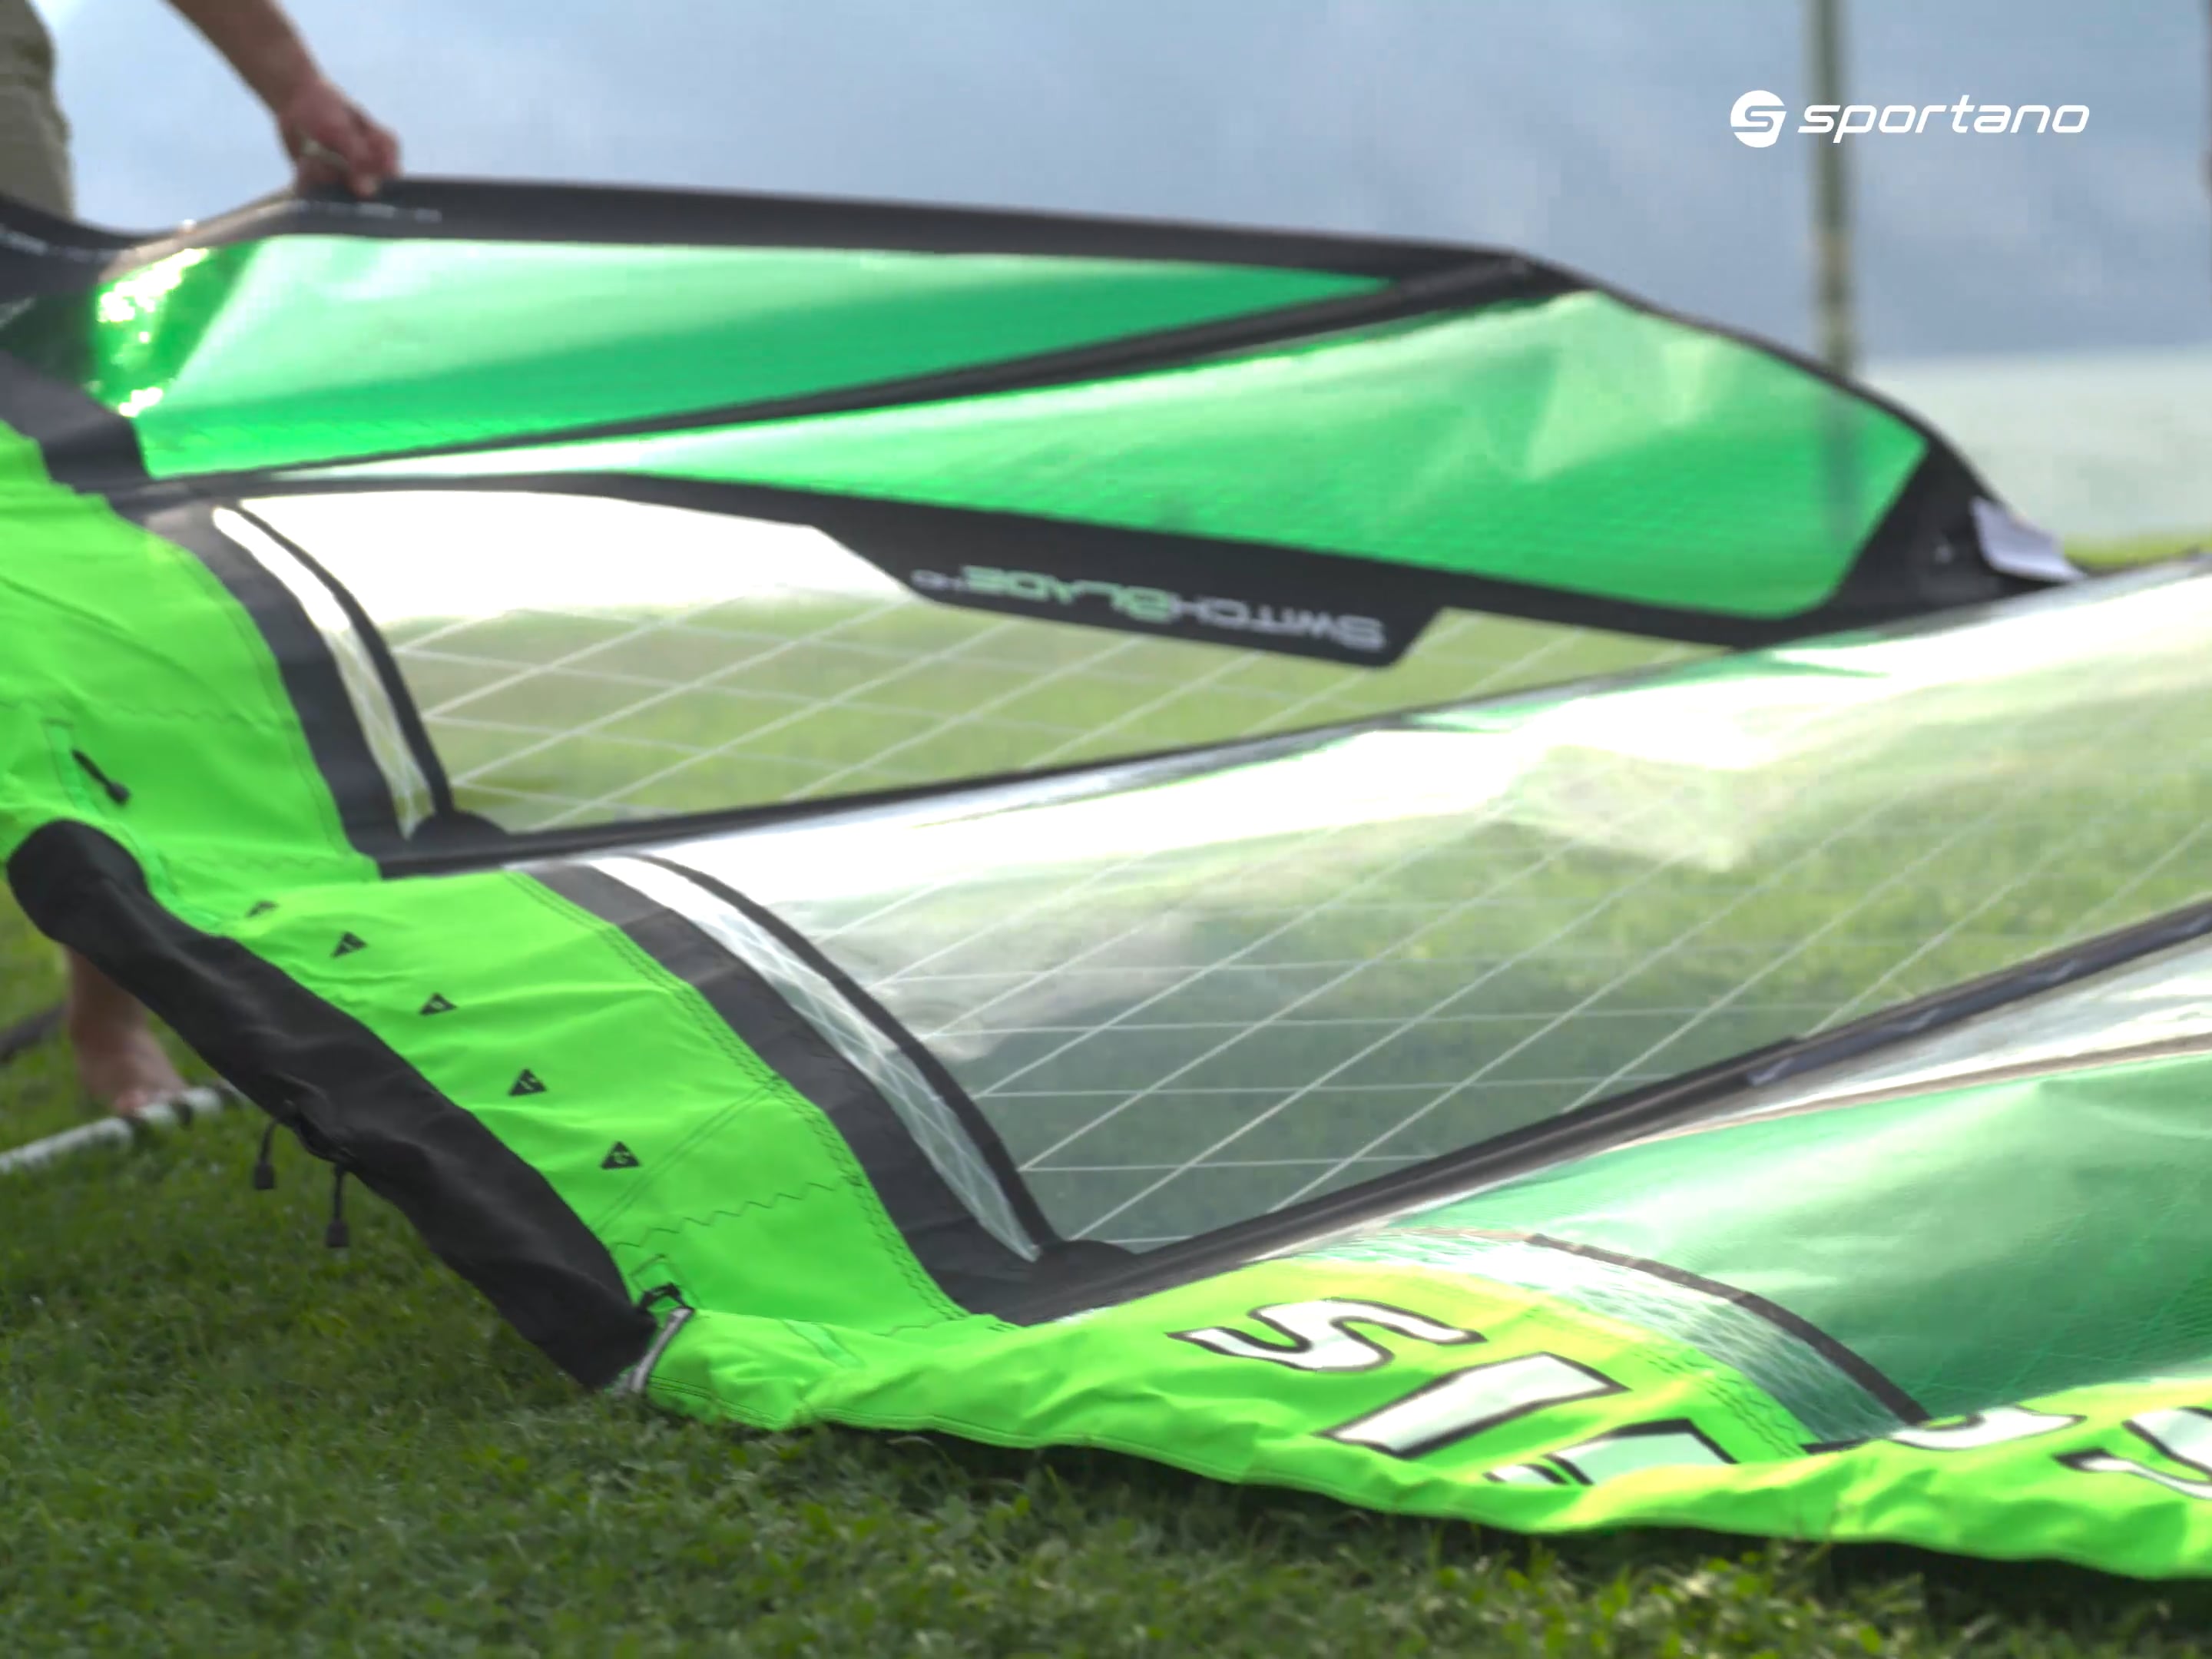 Vela da windsurf Loftsails 2022 Switchblade verde